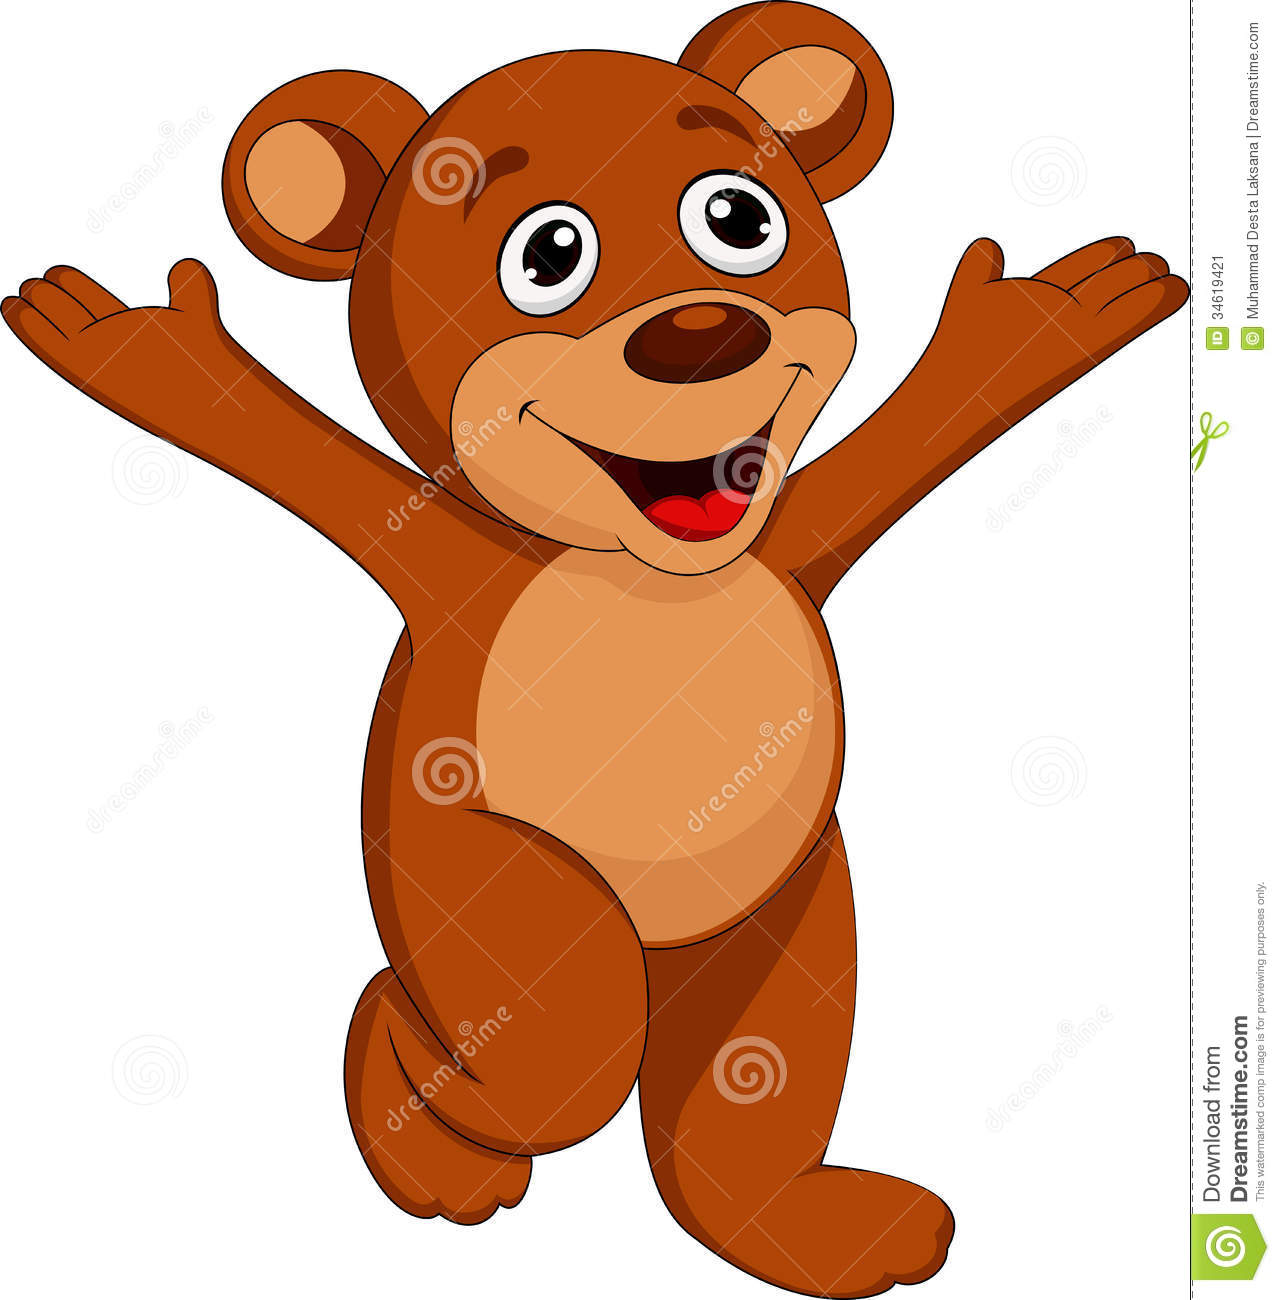 Happy bear cartoon stock illustration illustration of child